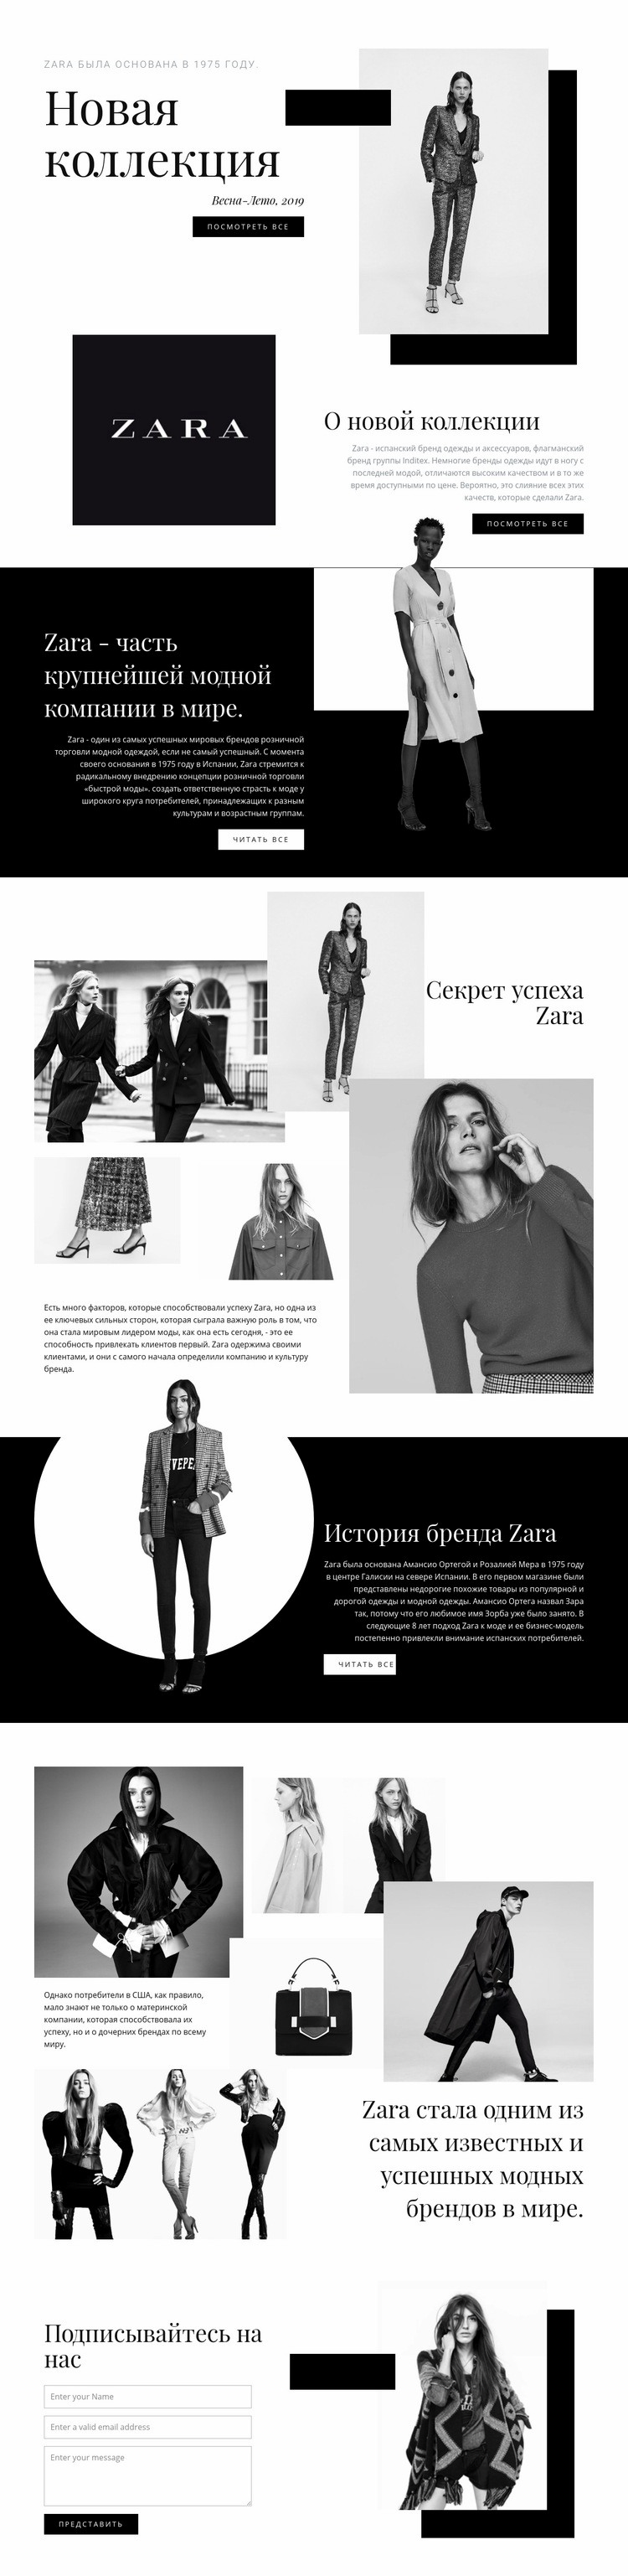 Коллекция Zara Дизайн сайта